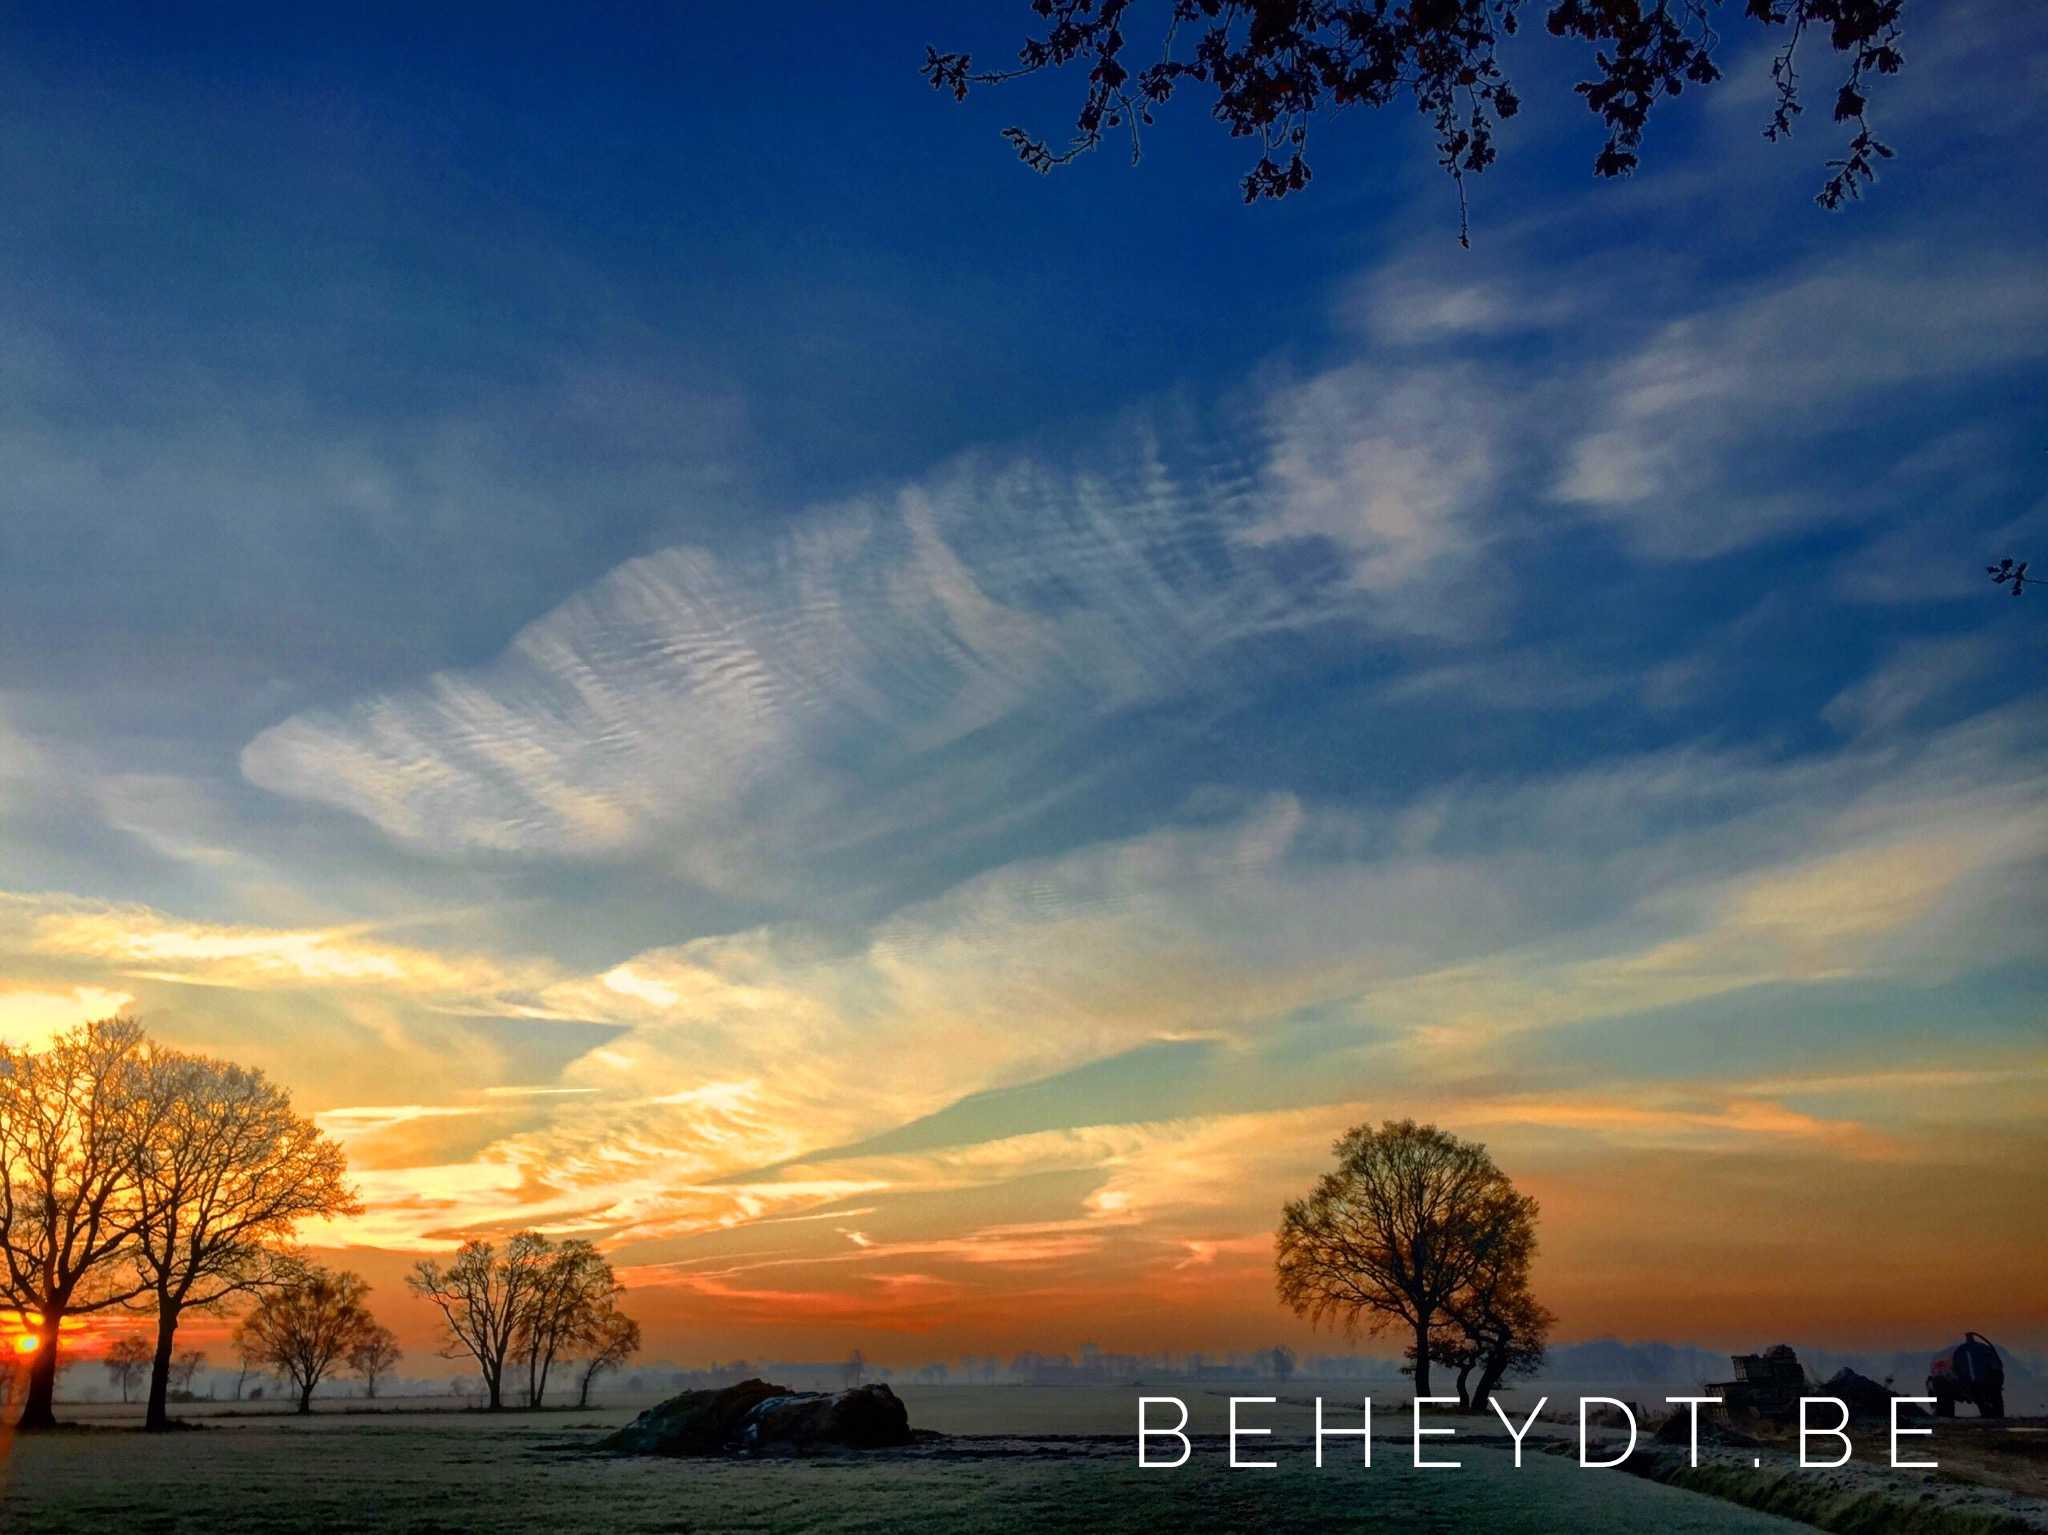 Dramatic sunrise over the countrysideDramatic sunrise over the countryside - Bjorn Beheydt